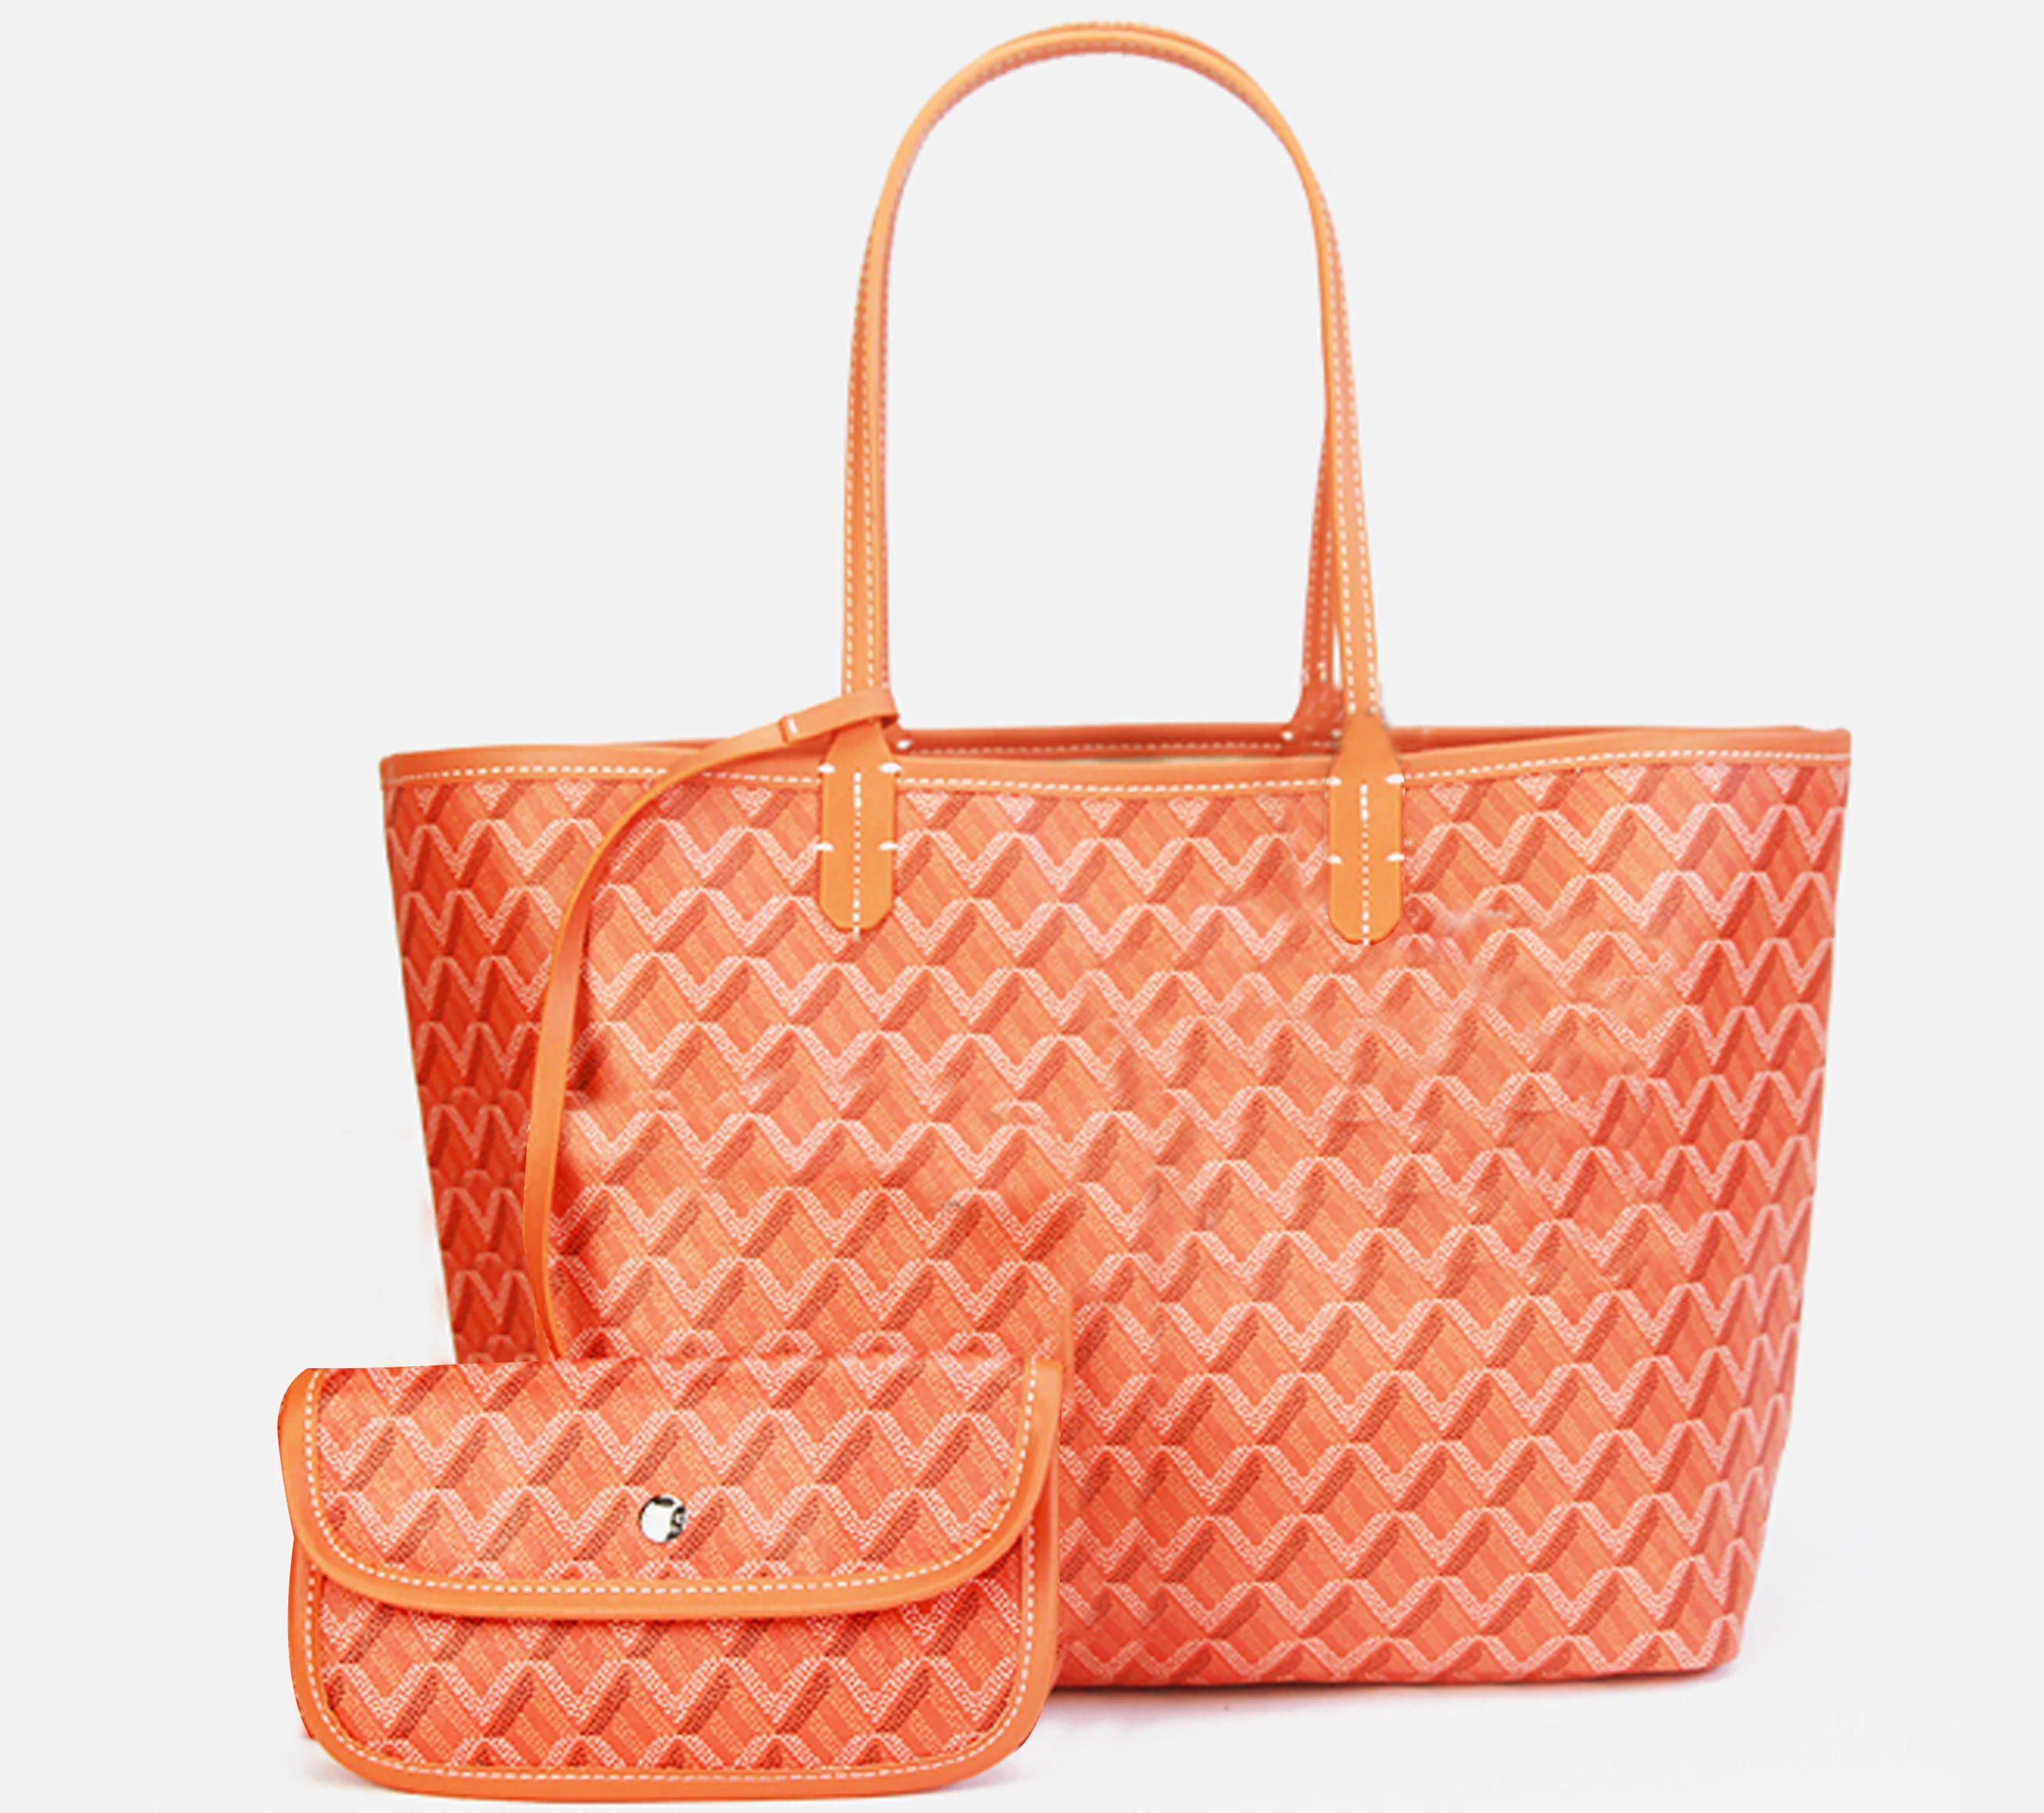 Dog Goyar bag Big Shoulder Bags A+++ Leather Tote Bag Large Capacity Women Handbags Ladies Shopping Handbag Designer Handle Bags images - 6